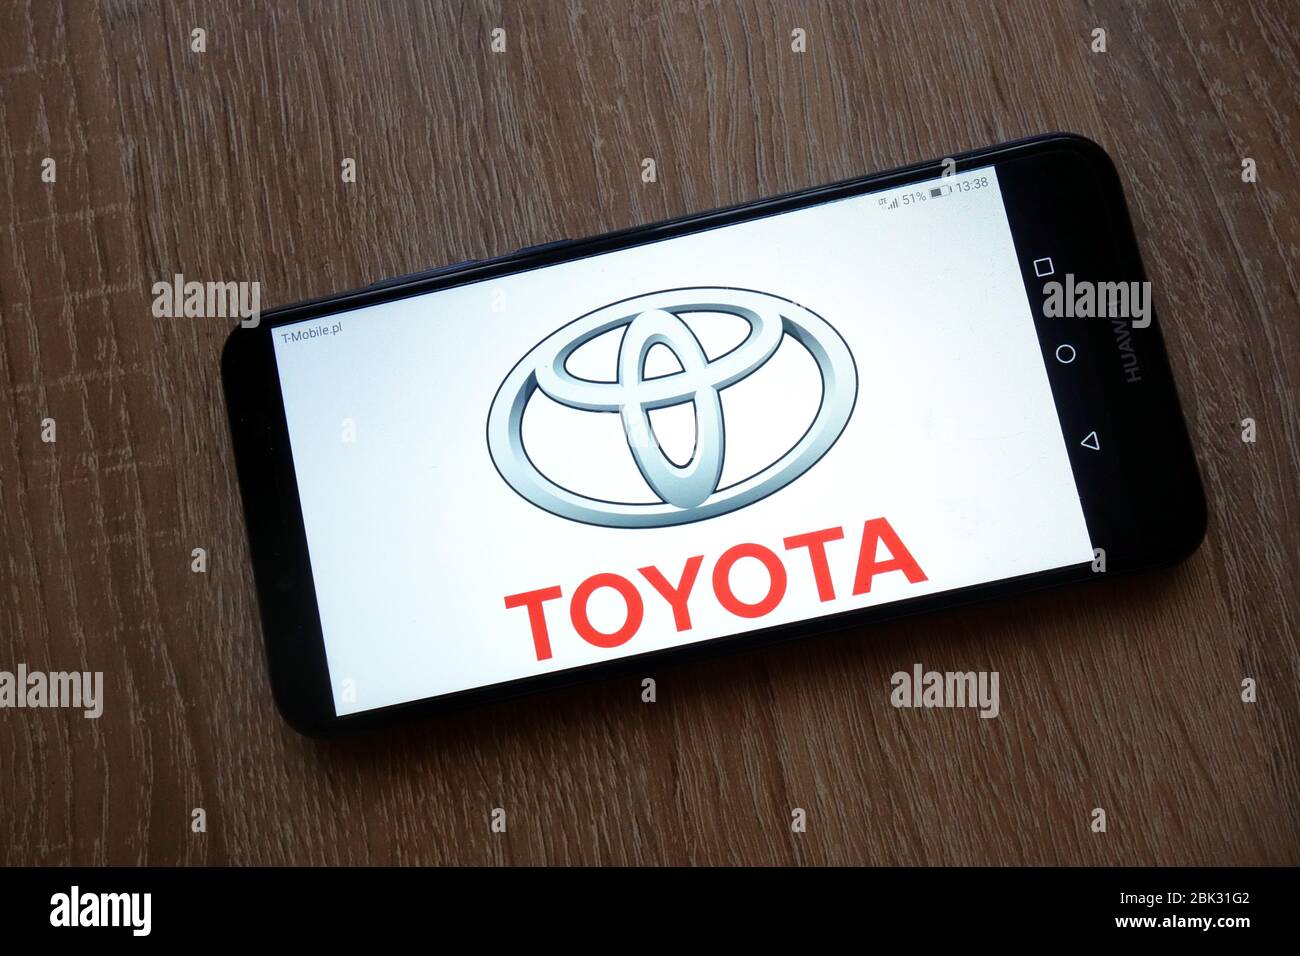 Toyota logo displayed on smartphone Stock Photo